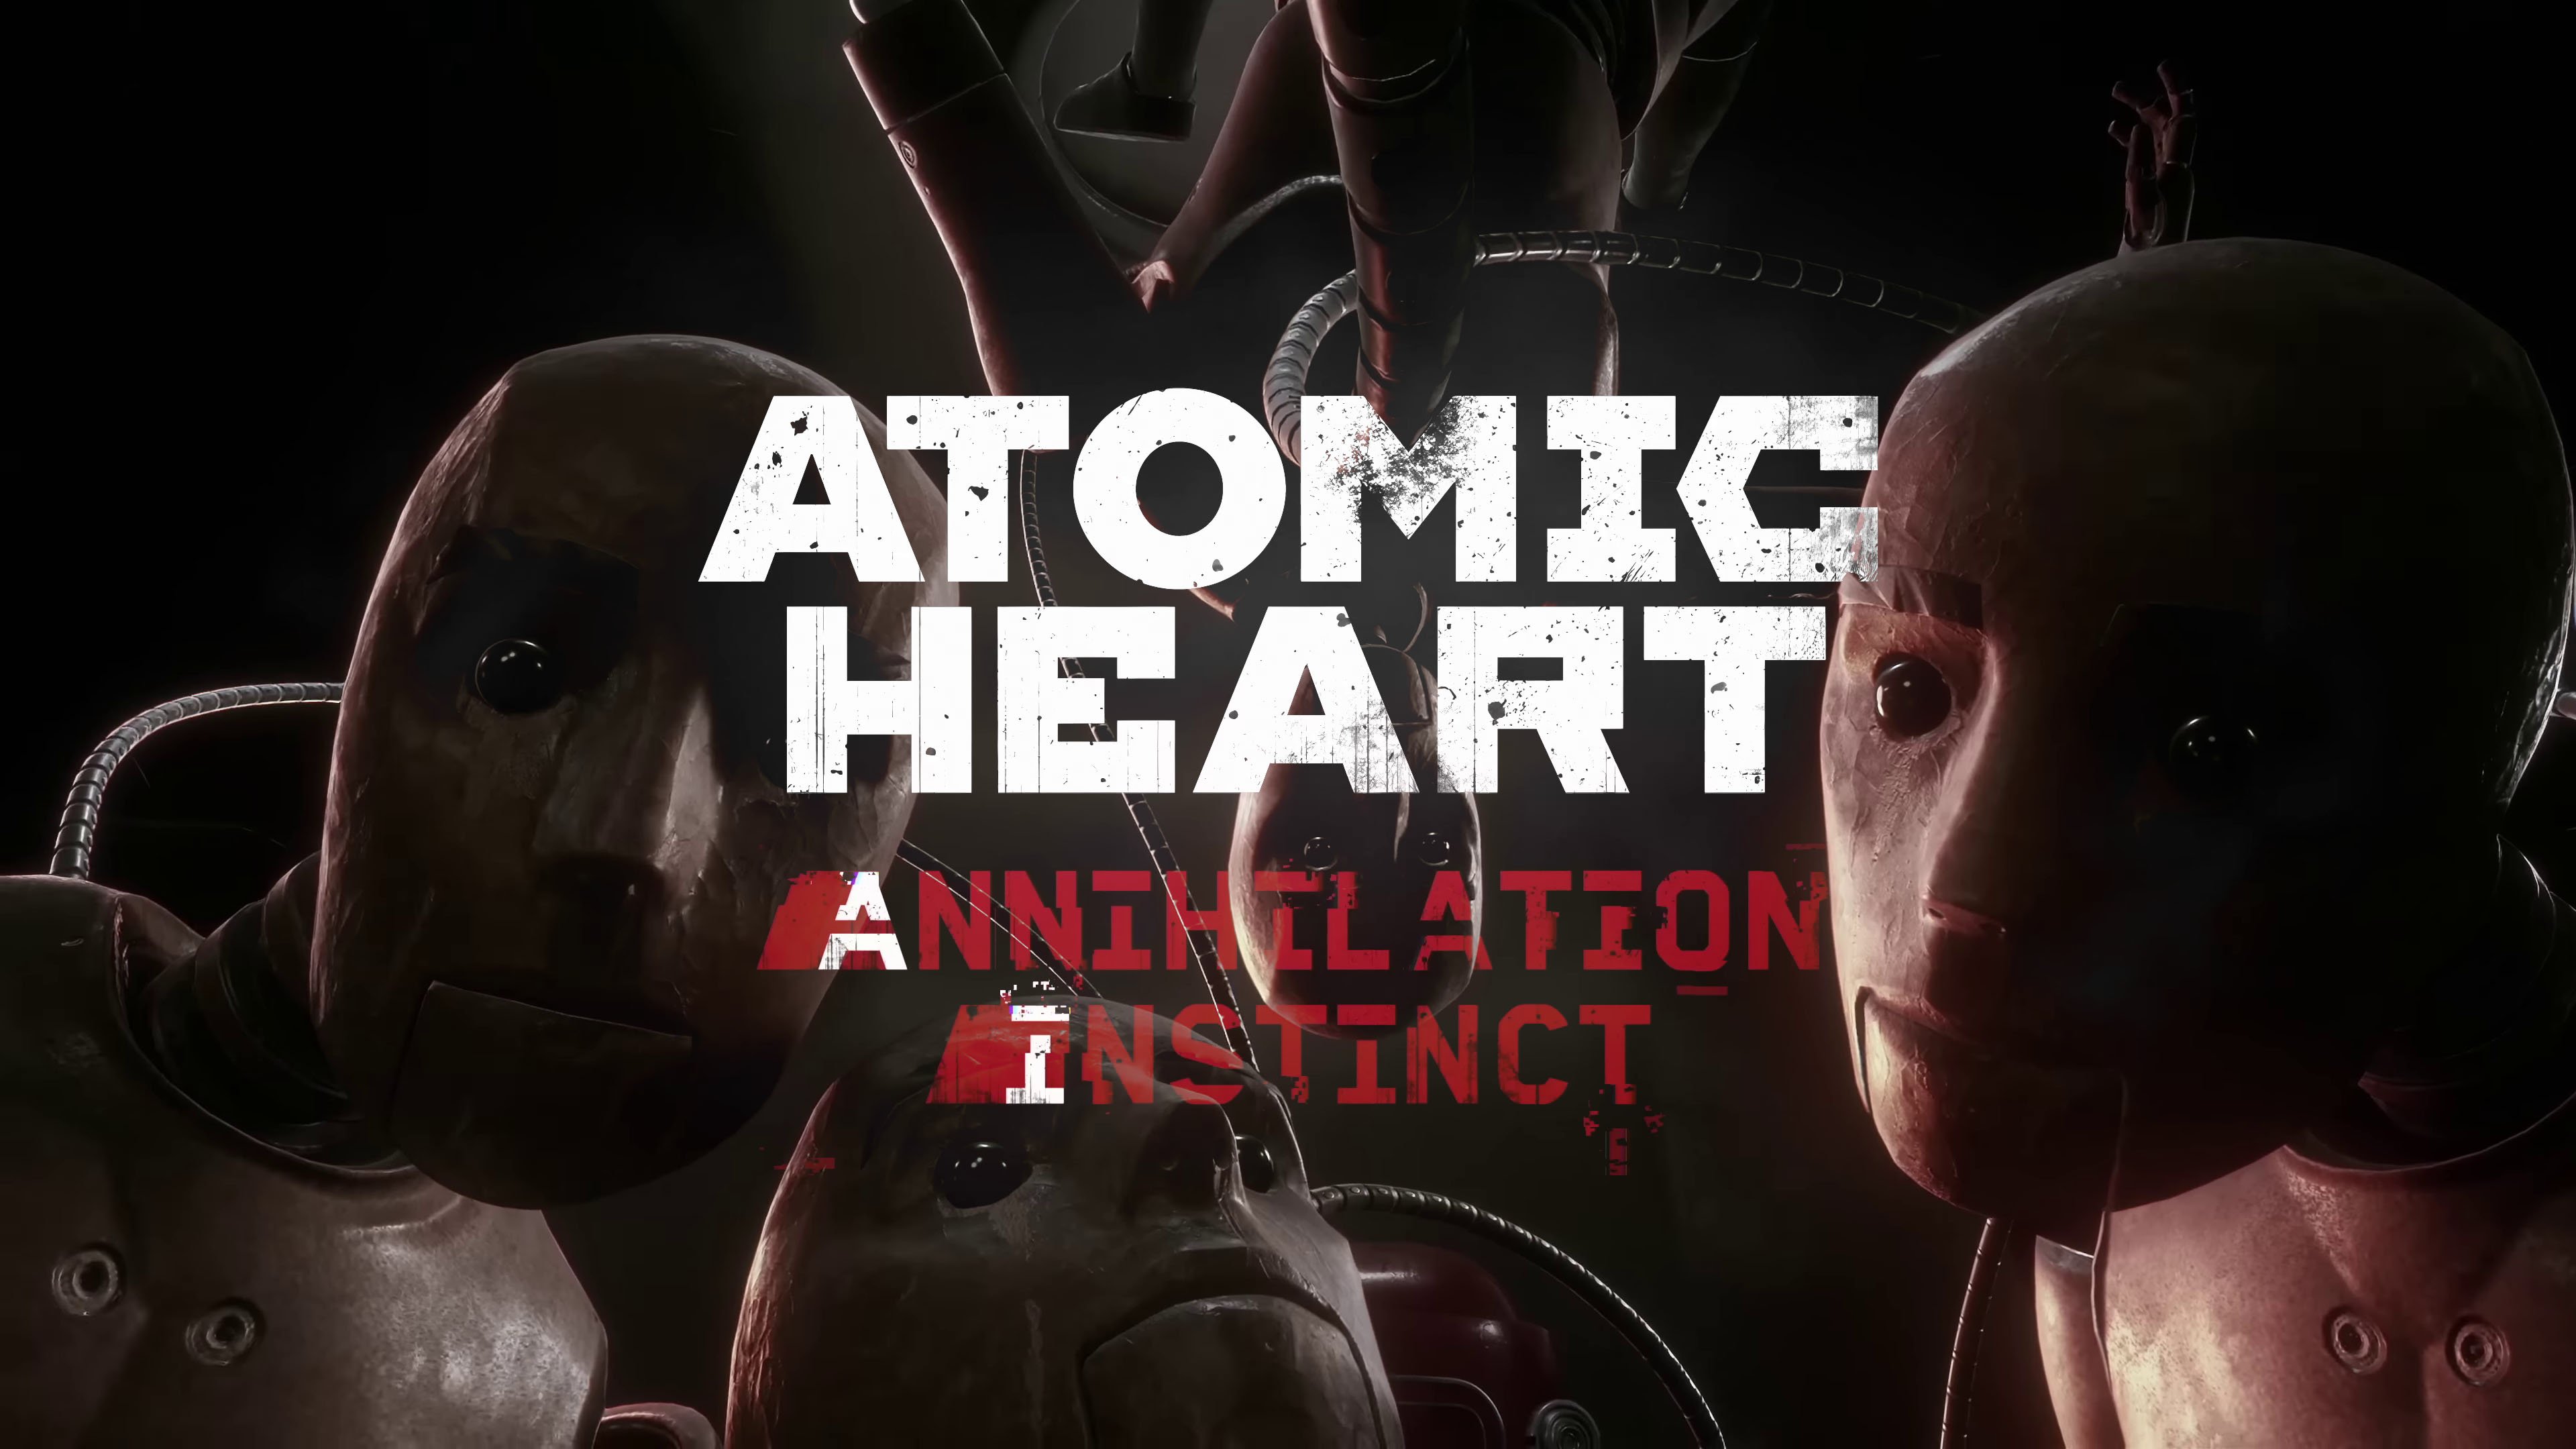 Atomic Heart Update 1.16 for Aug. 2 Adds Annihilation Instinct DLC via  Patch 1.9.2.0